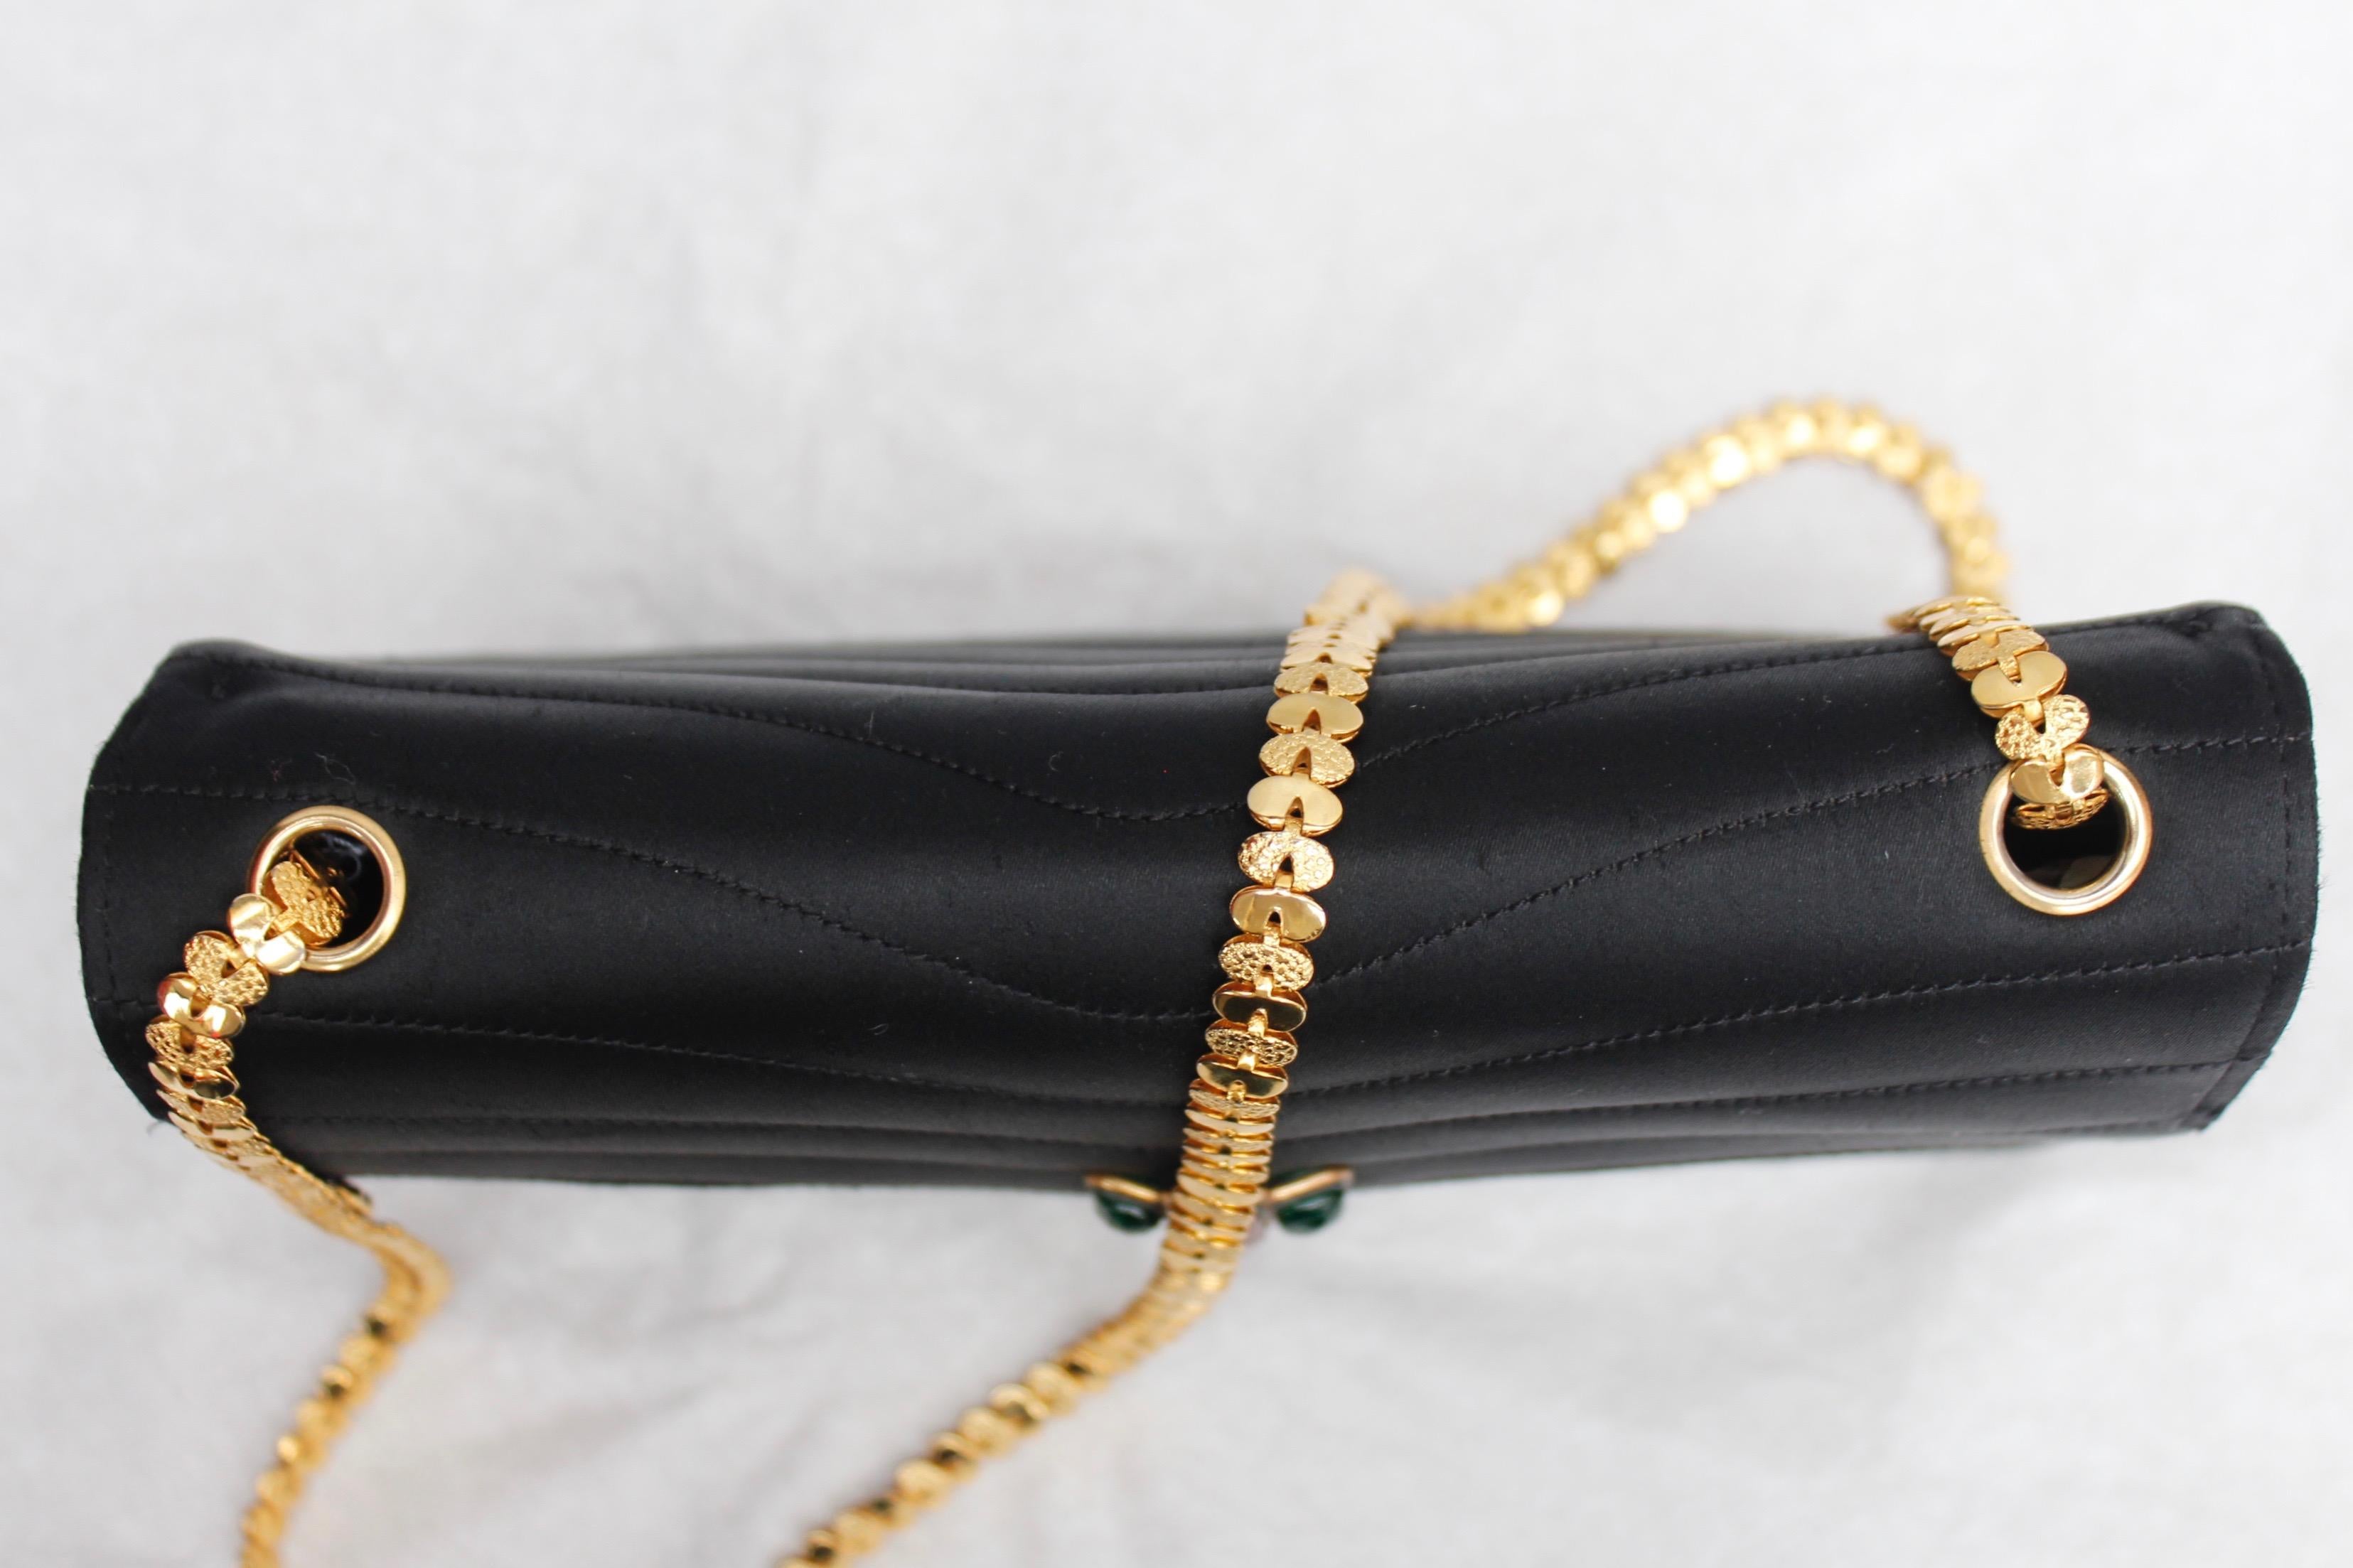 Chanel elegant evening jewel bag in black satin In Good Condition For Sale In Paris, FR